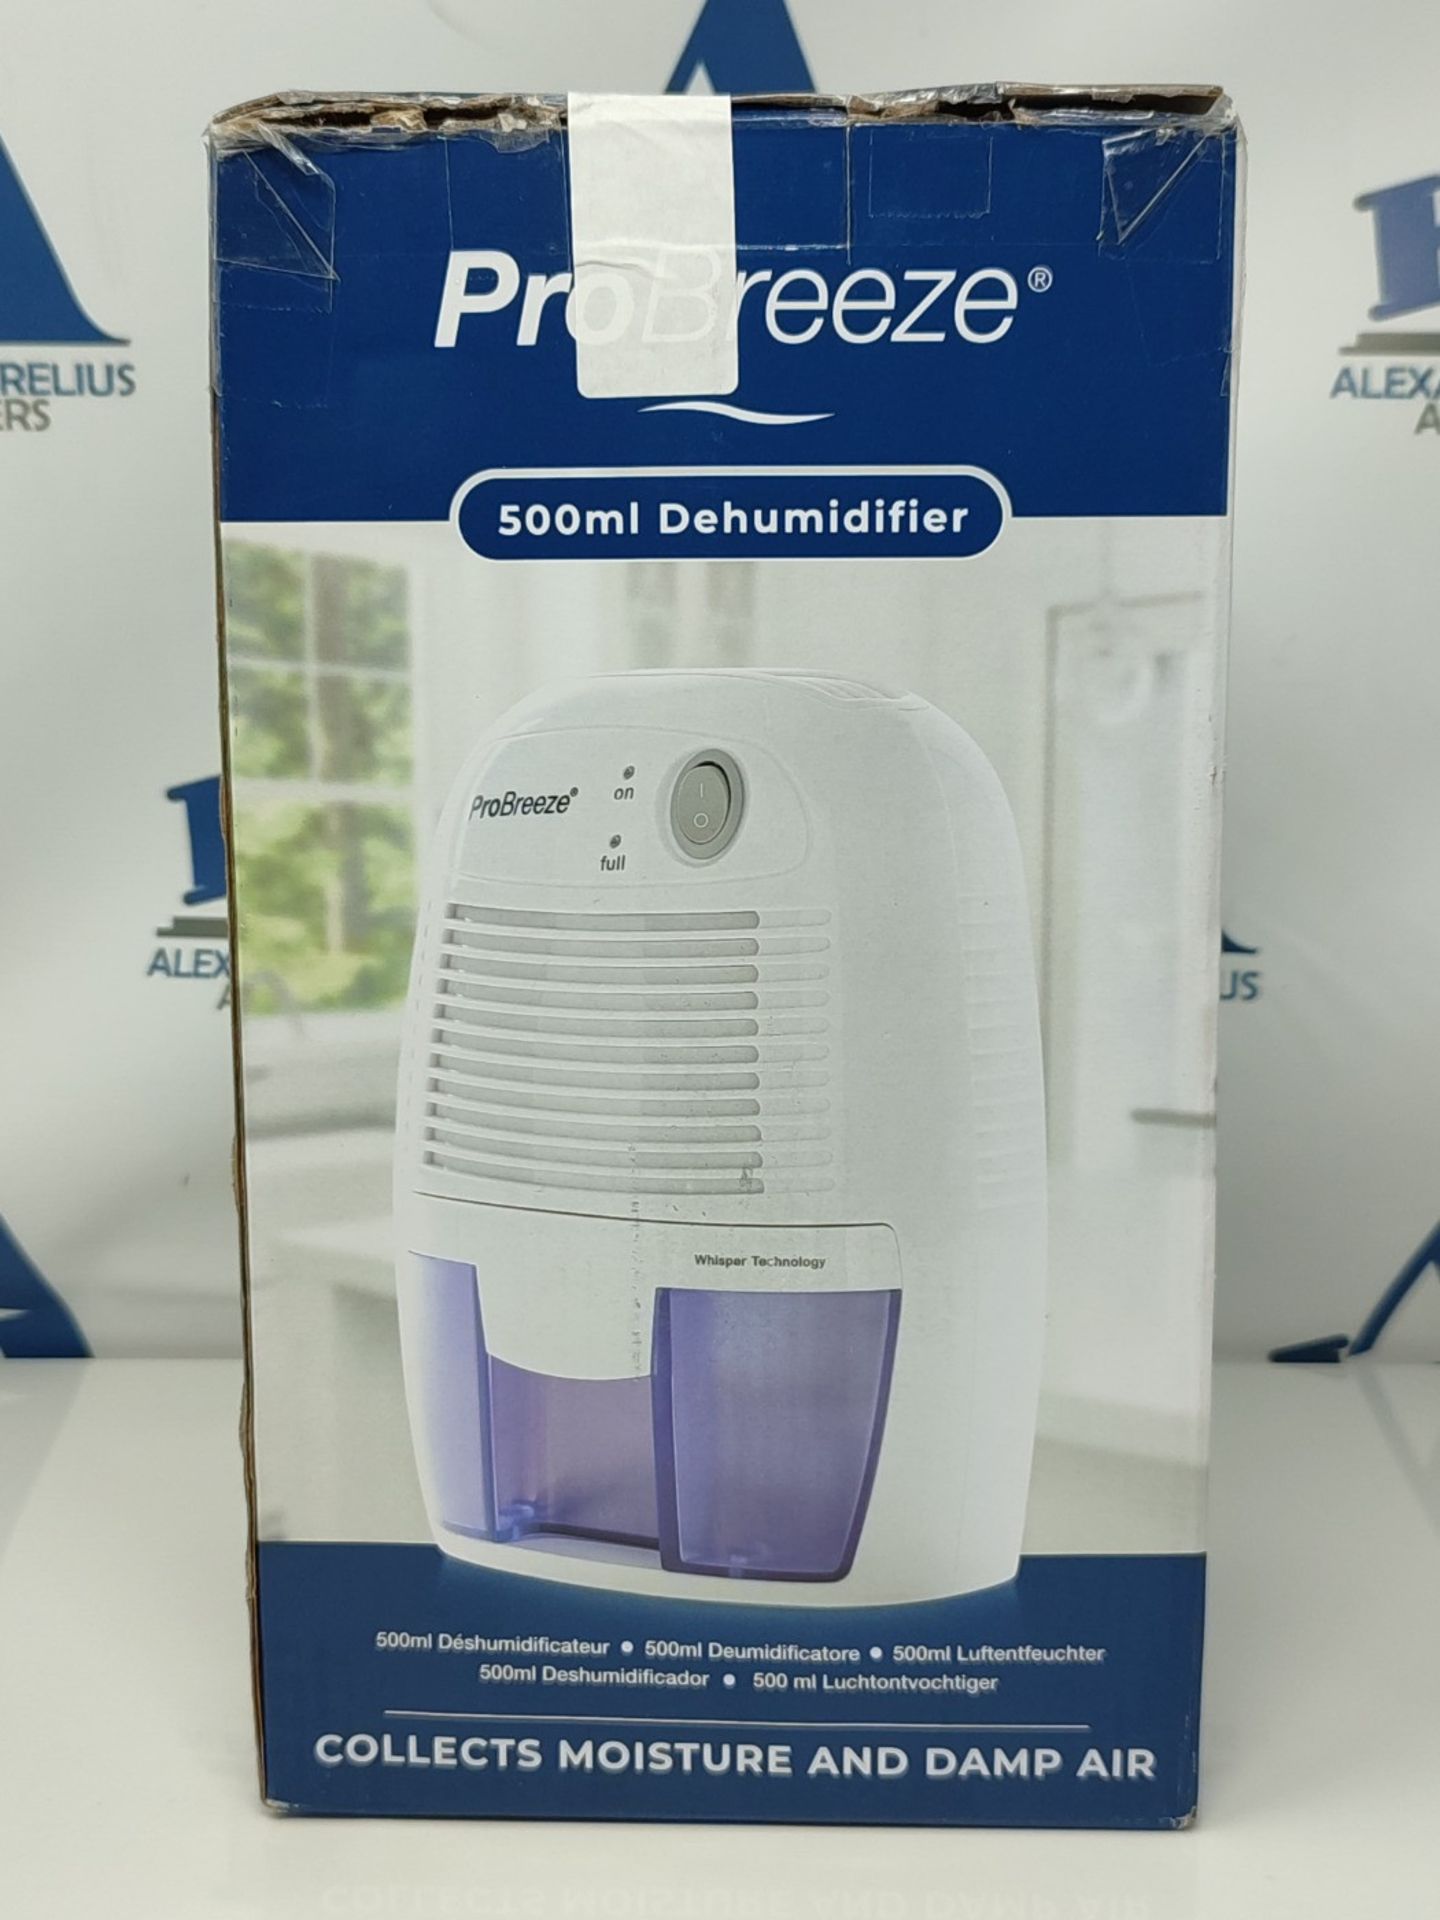 Pro Breeze Dehumidifier 500ml Compact and Portable Mini Air Dehumidifier for Damp, Mou - Bild 3 aus 3